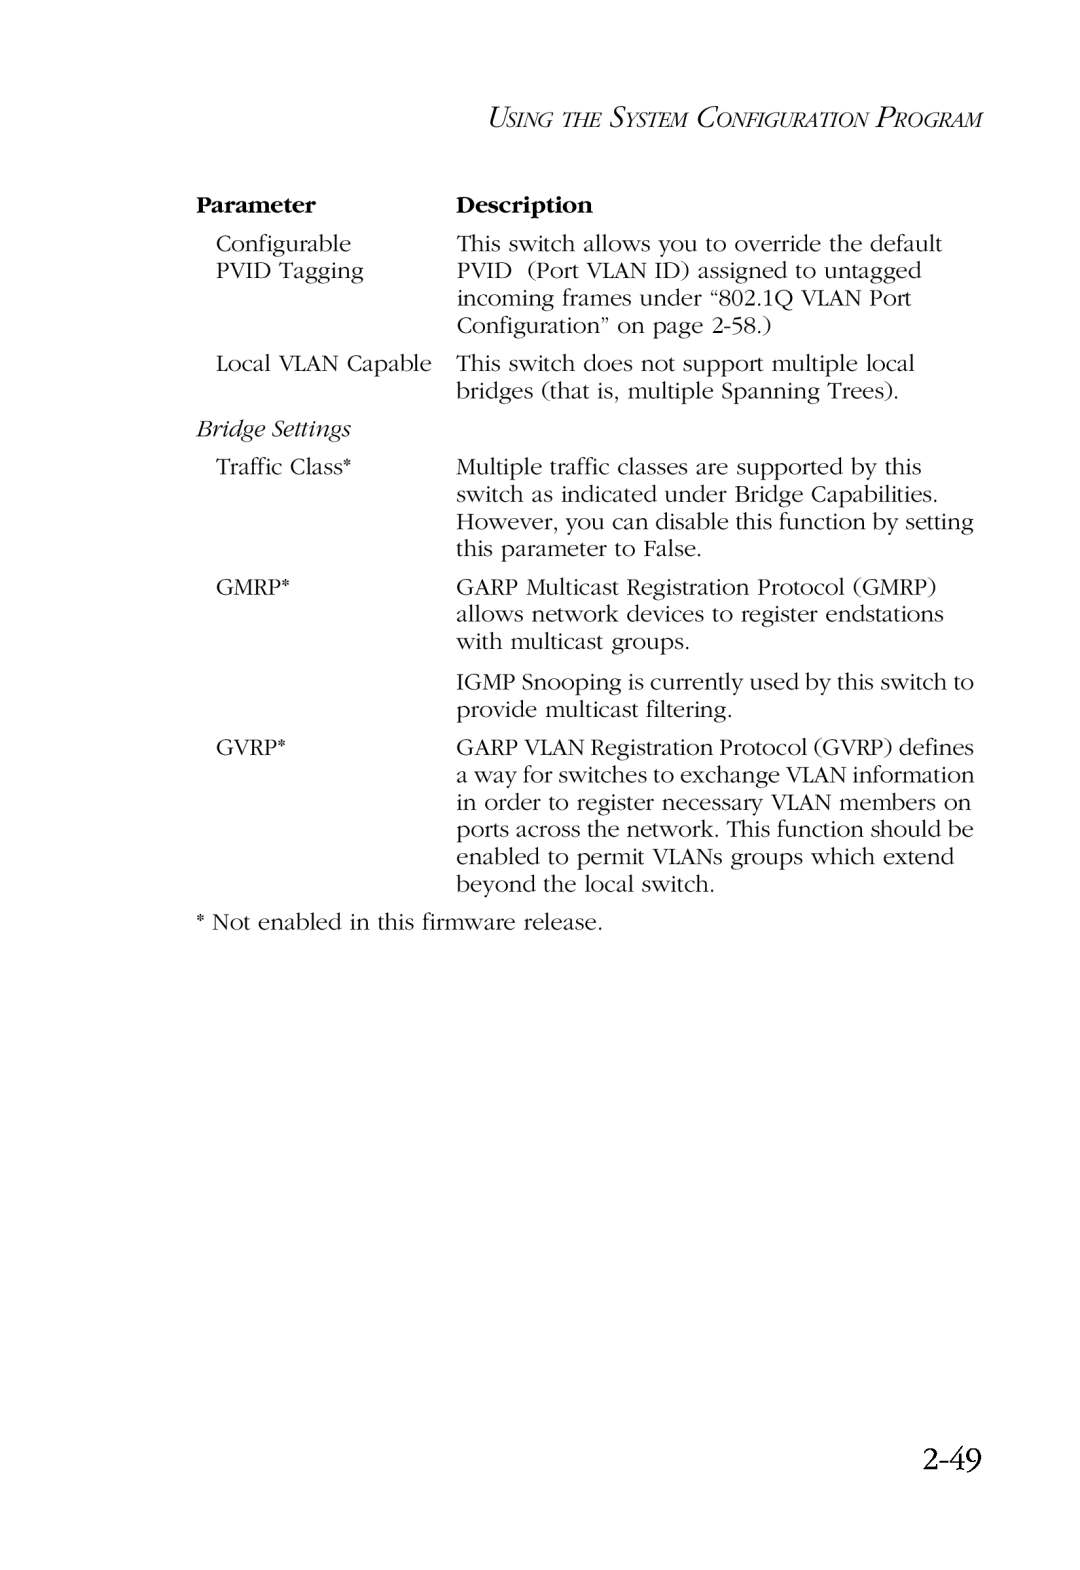 SMC Networks SMC6924VF manual 2-49, Parameter, Description, Bridge Settings 